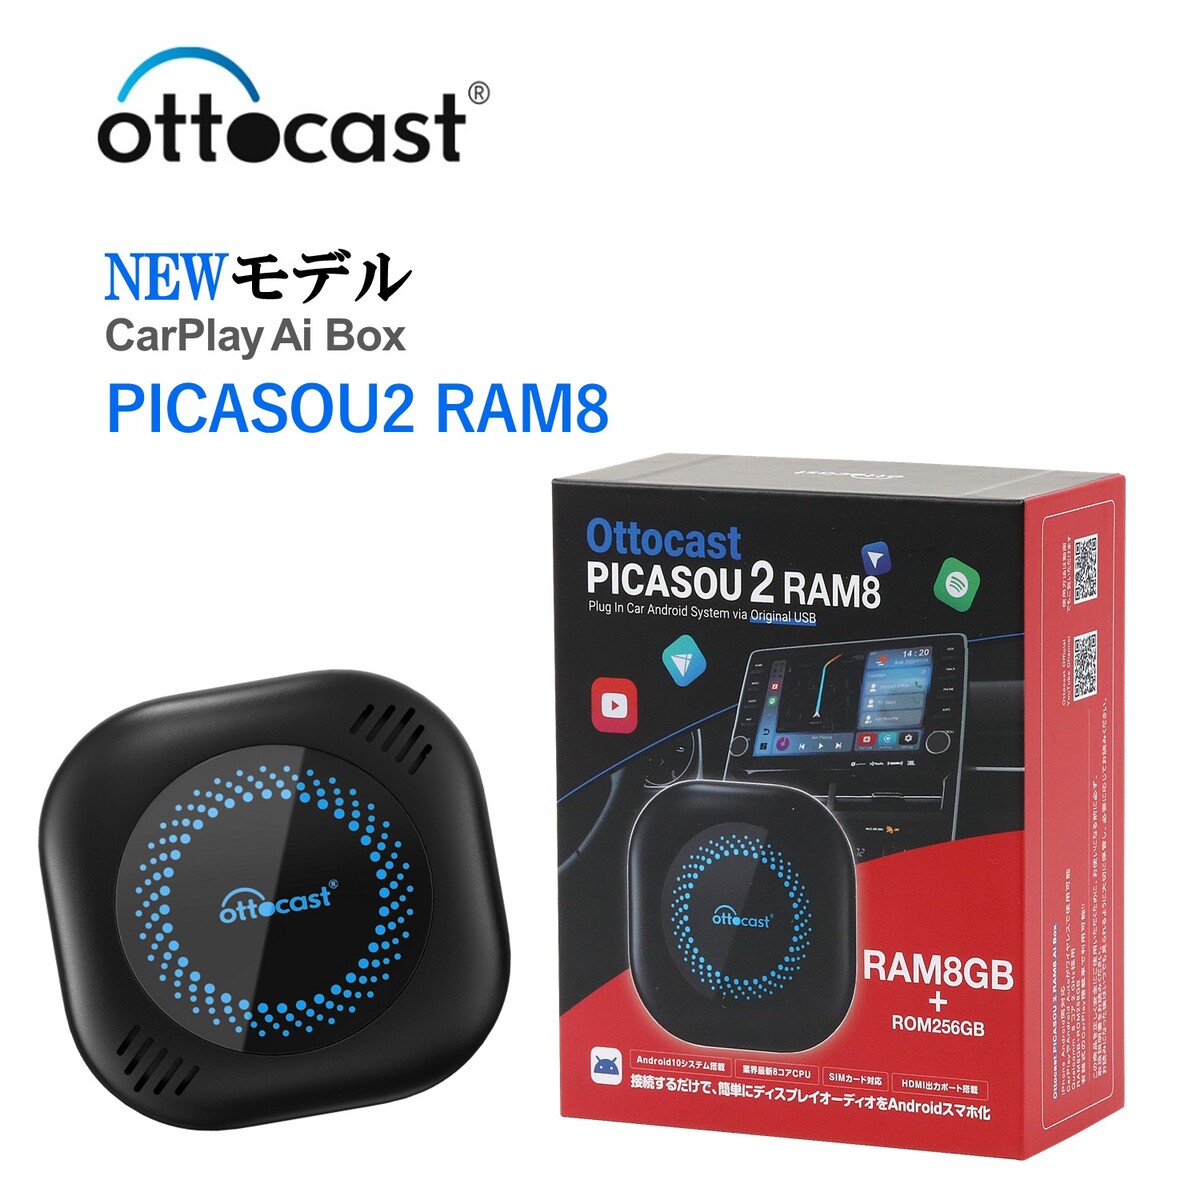 Ottocast PICASOU2 RAM8 特別価格 - カーオーディオ